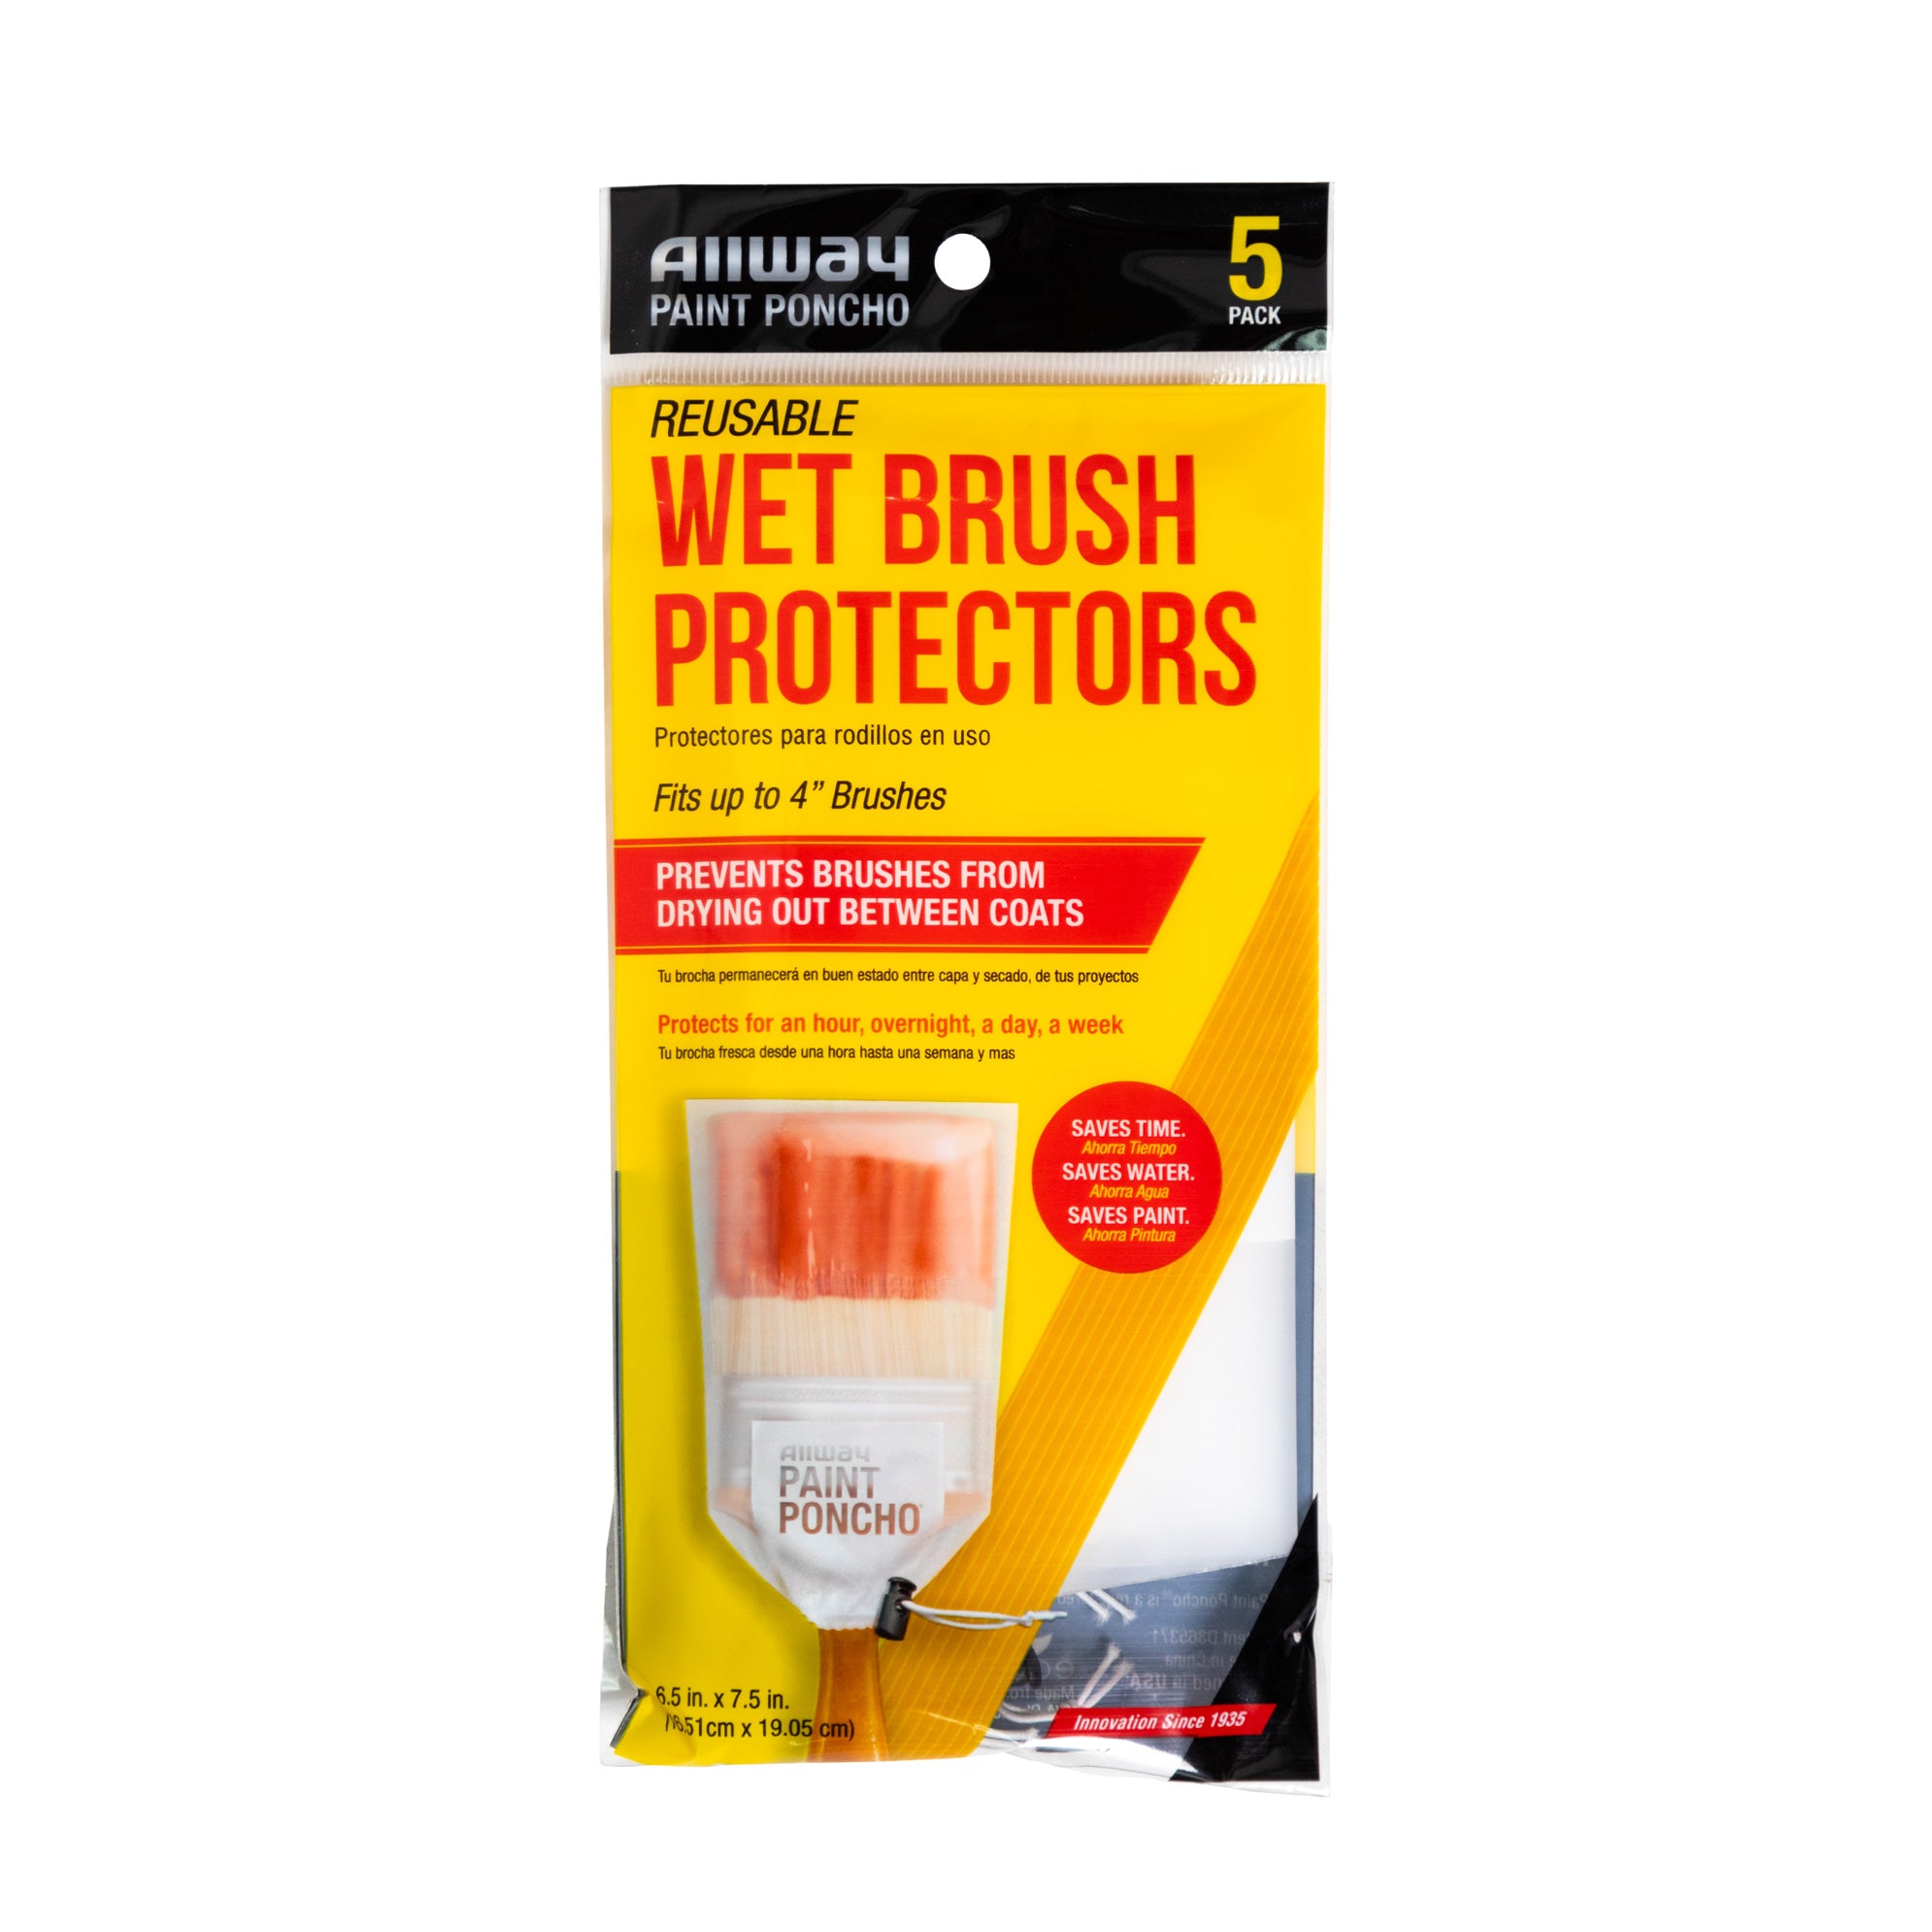 Paint Poncho Brush Protectors